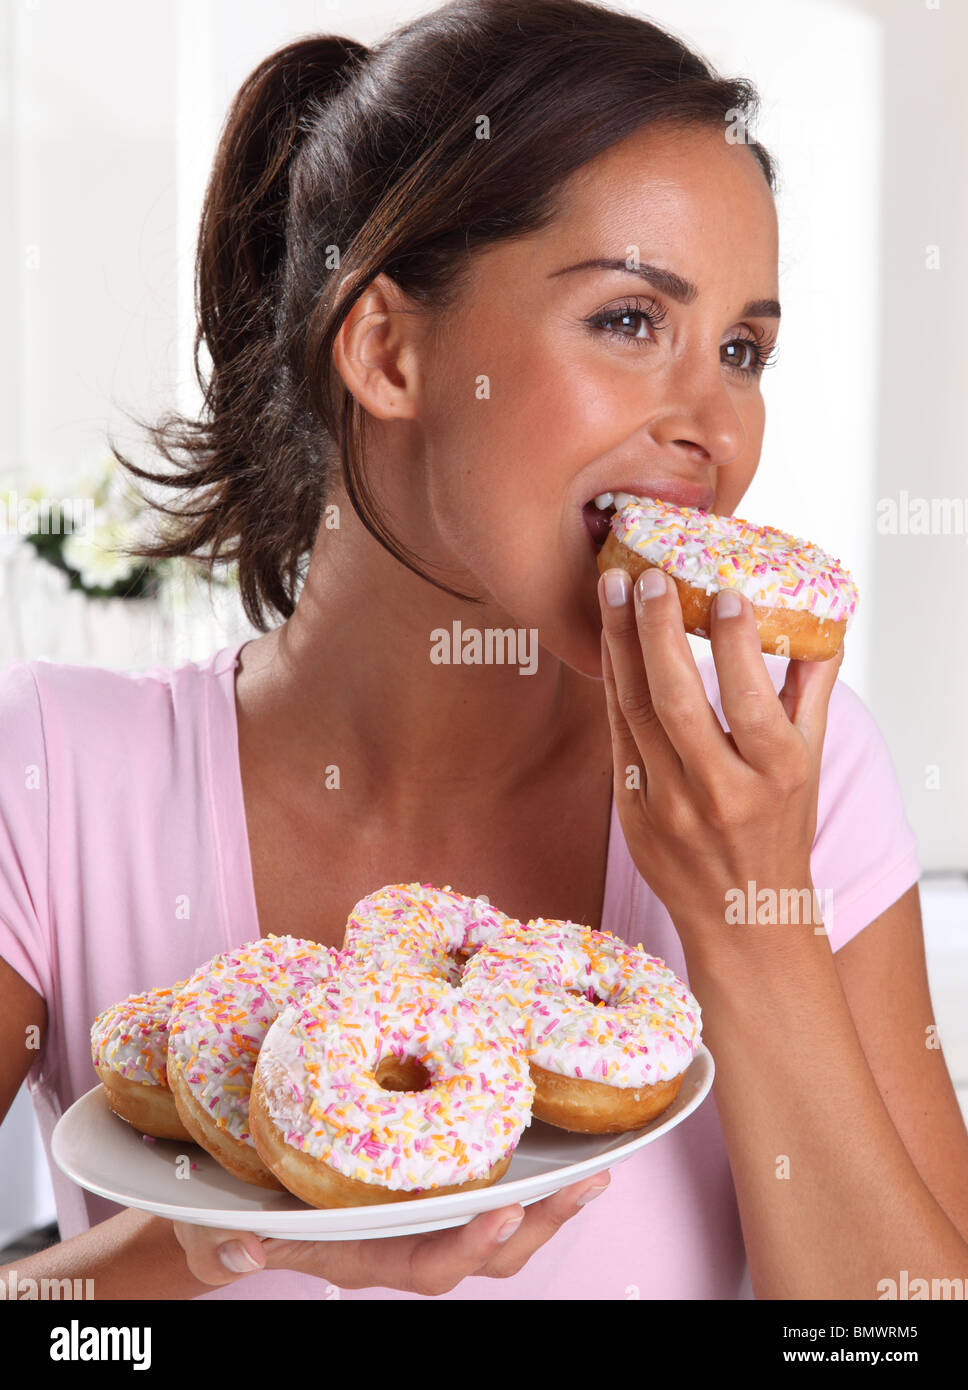 WOMAN EATING DOUGHNUTS Stock Photo